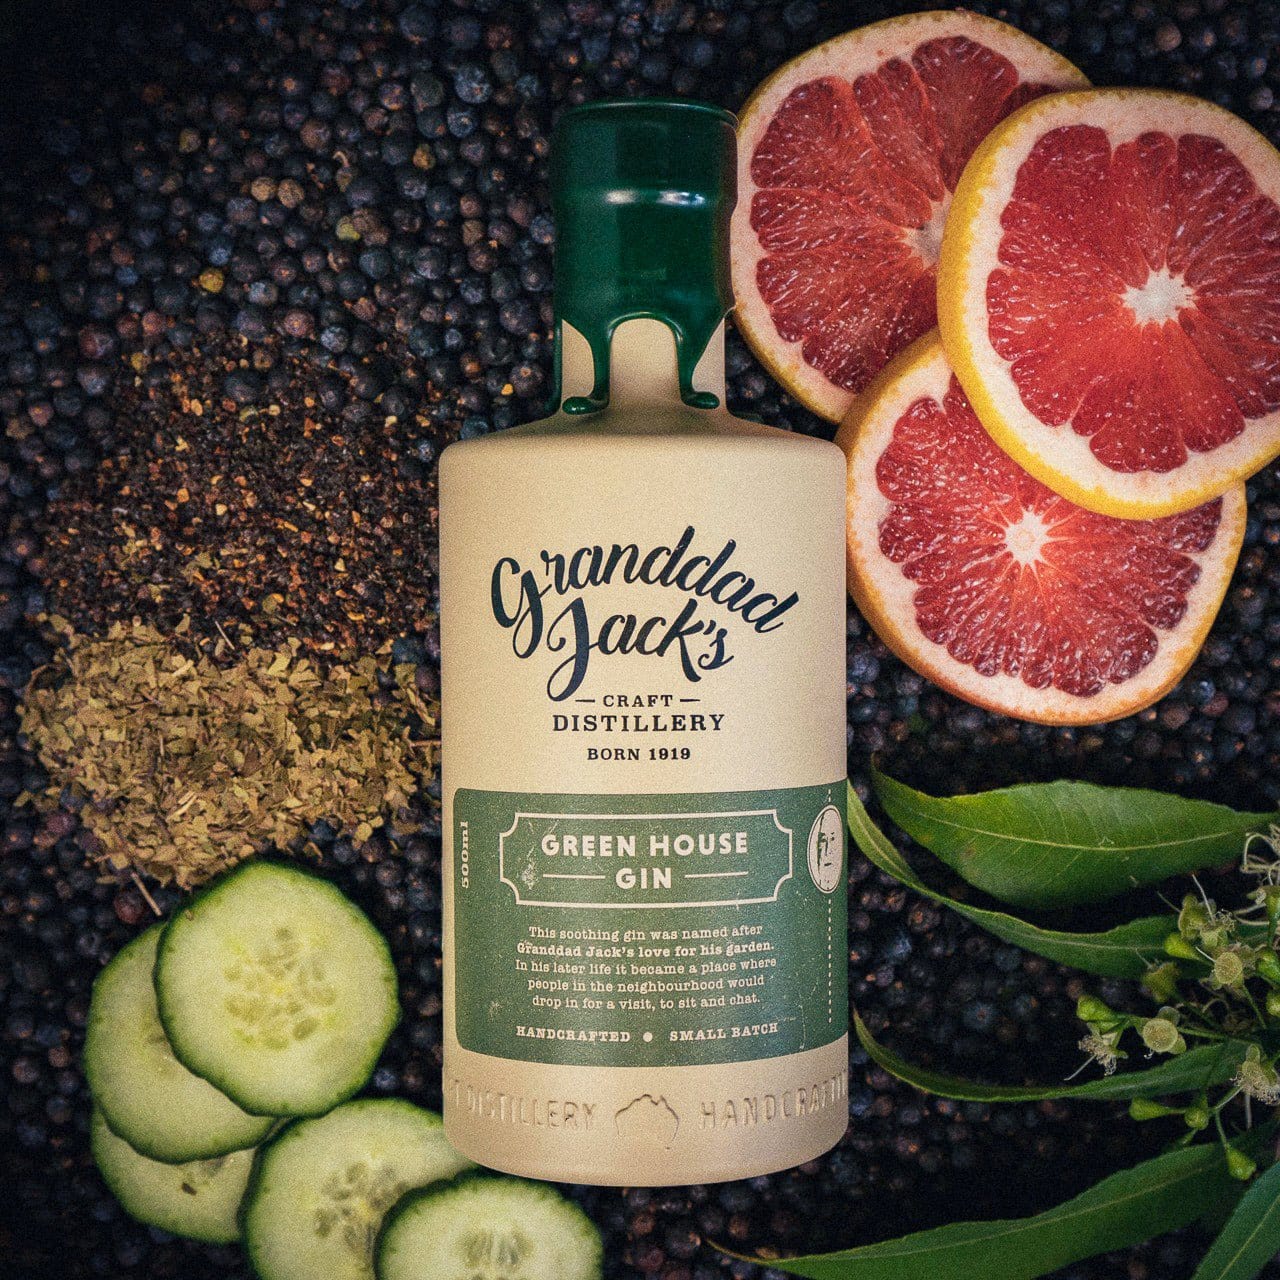 Granddad Jacks Craft Distillery Greenhouse Gin